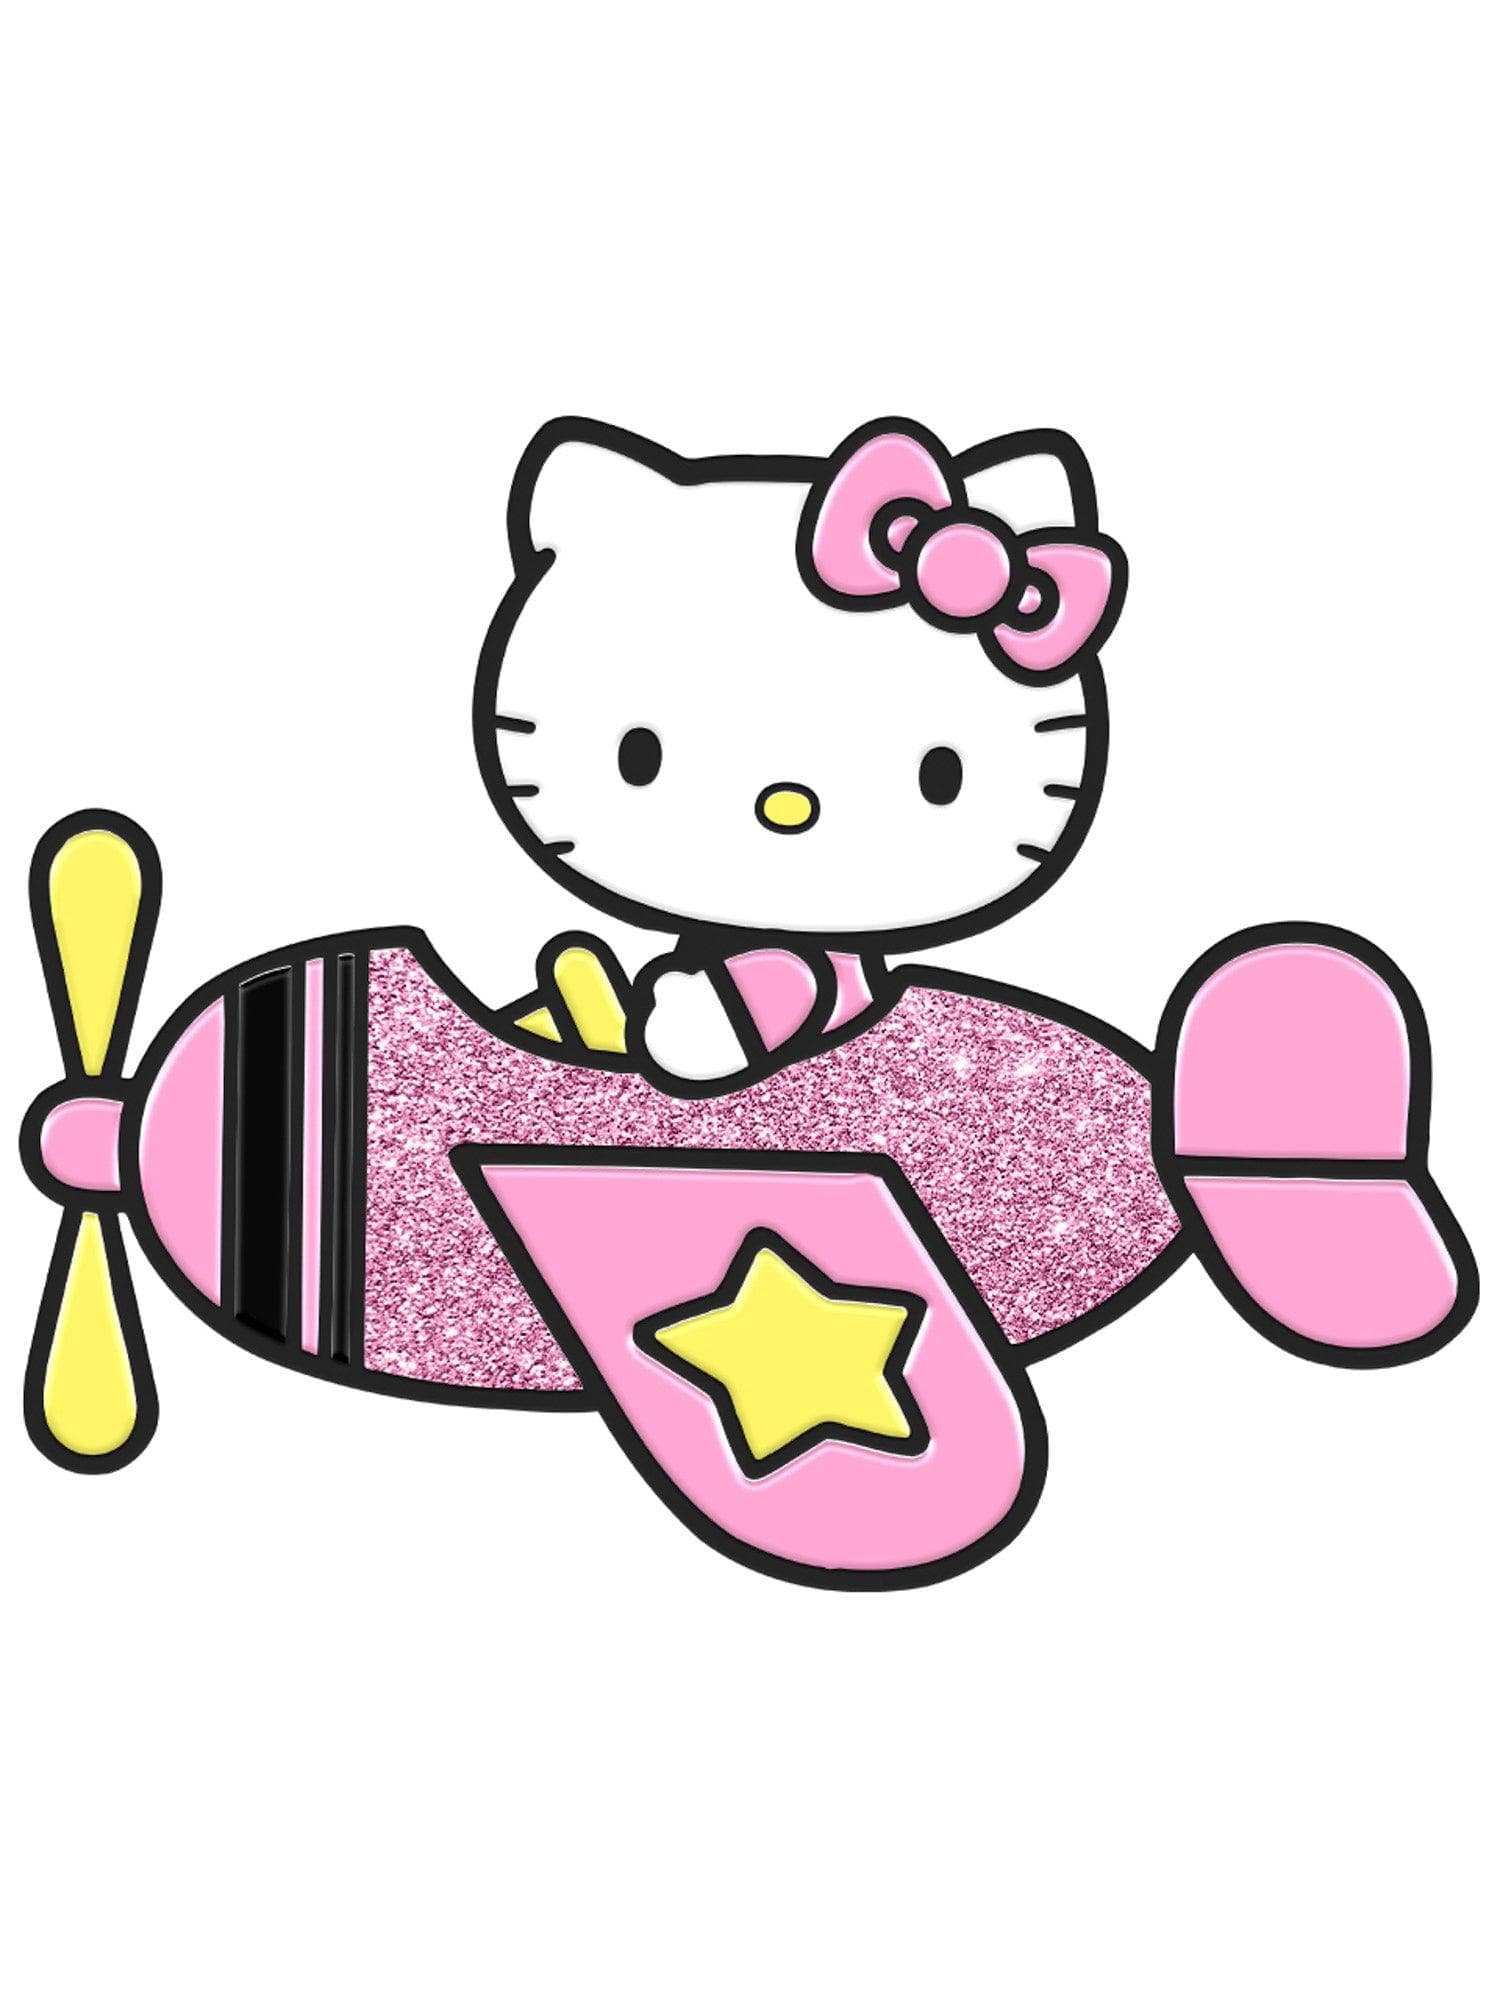 Kidrobot - Hello Kitty Lanyard and Pin Set - costumes.com